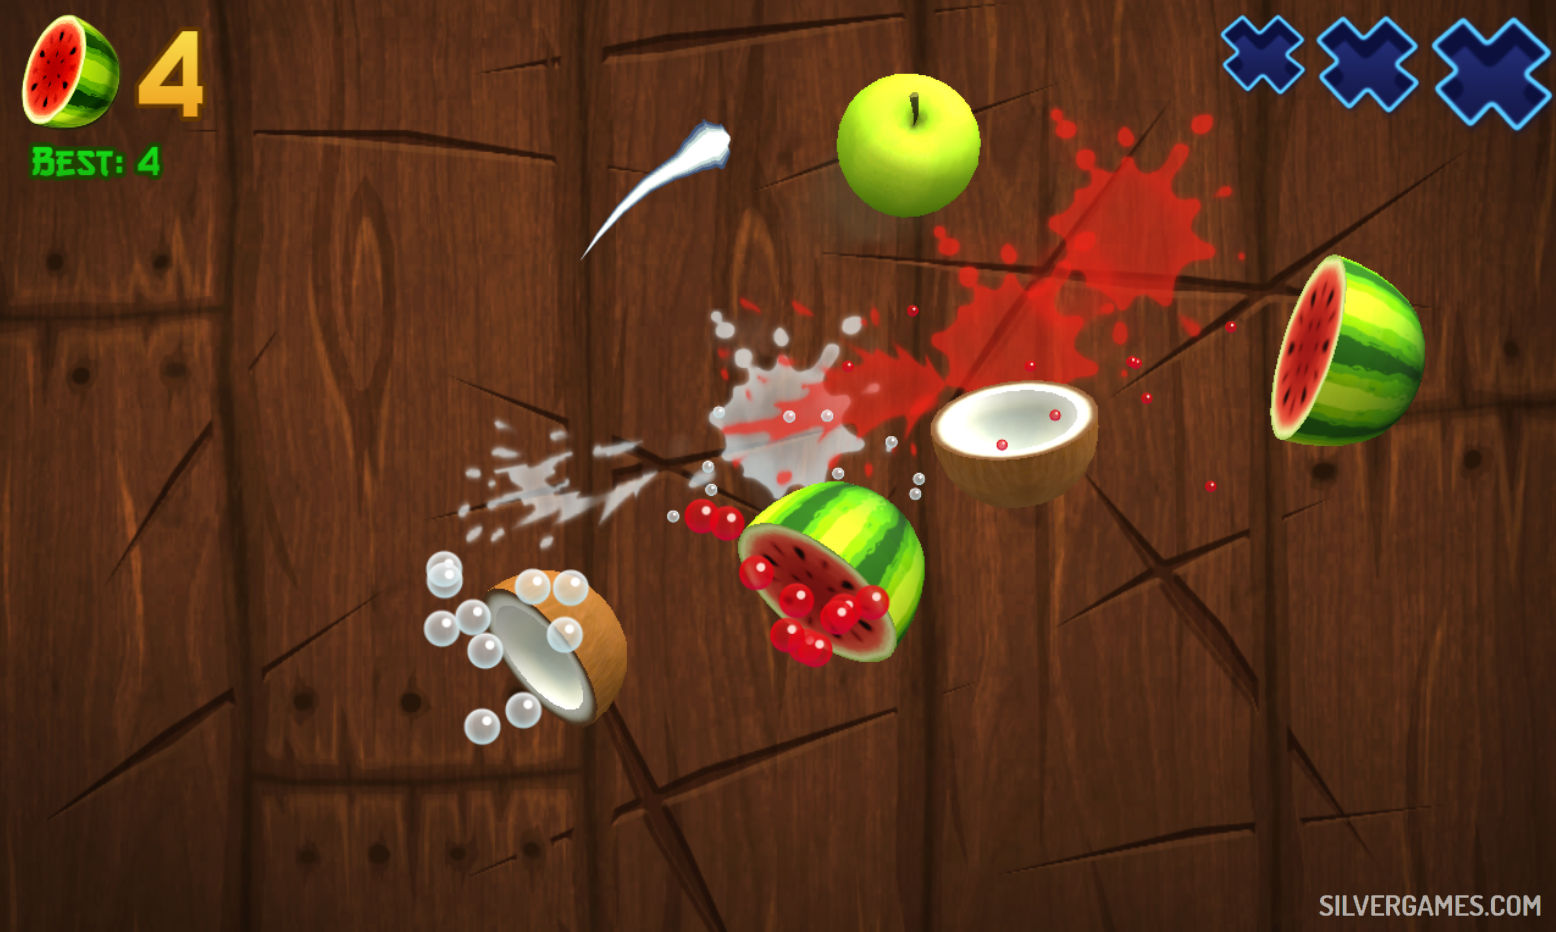 Play Fruit Ninja HD Game Online at